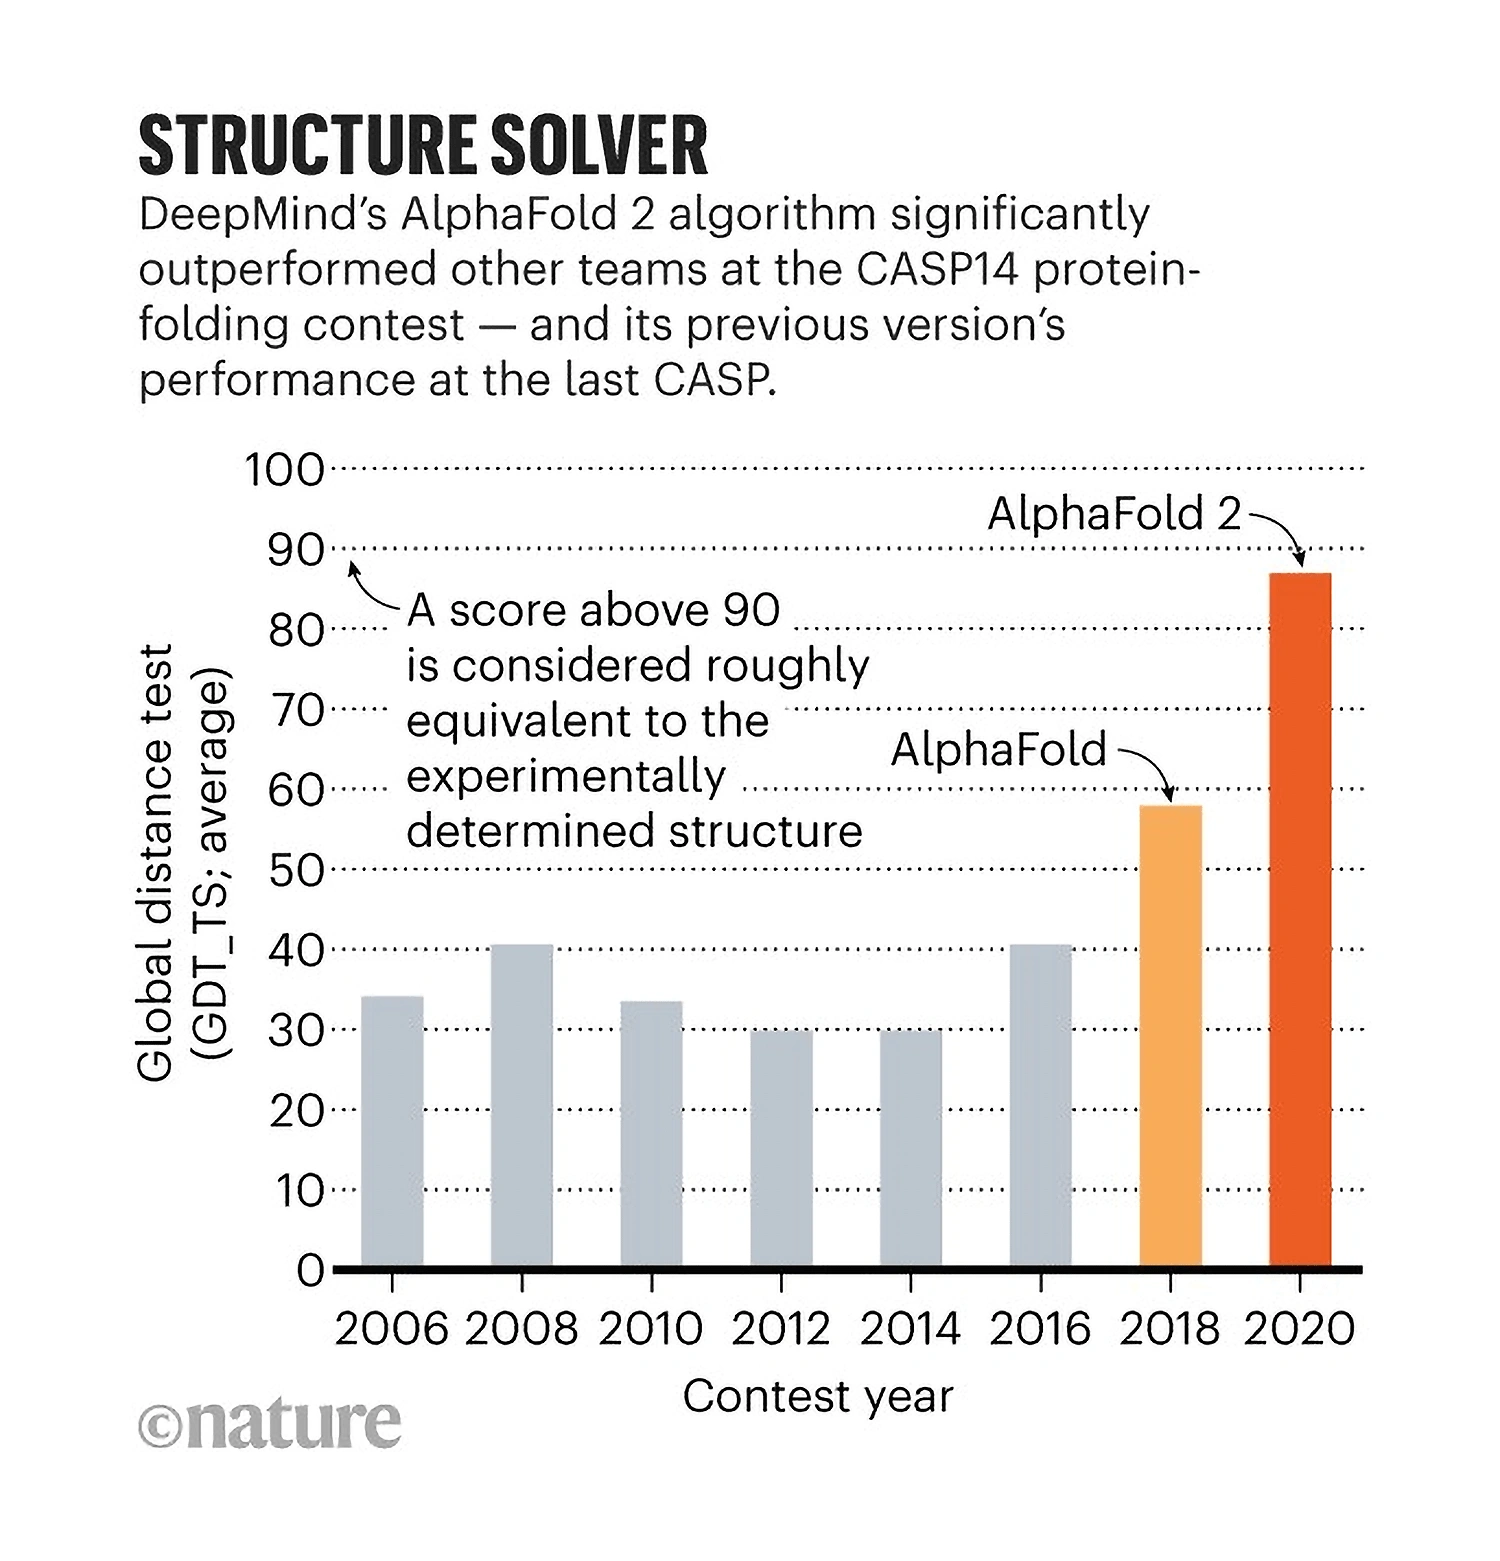 alphafold-structure-solver